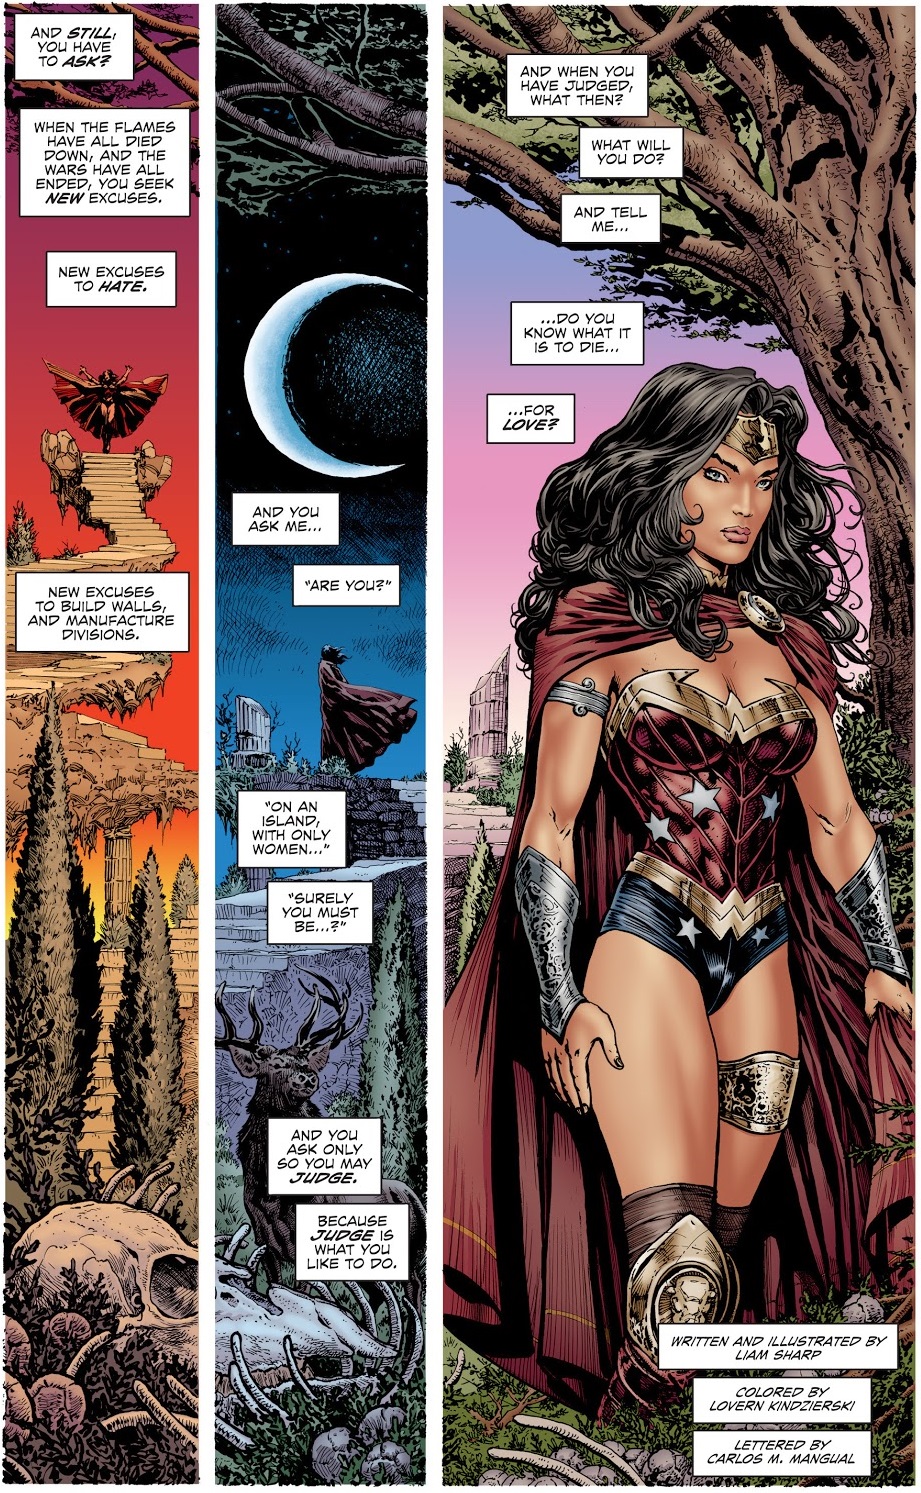 Wonder Woman Diana Prince bisexual